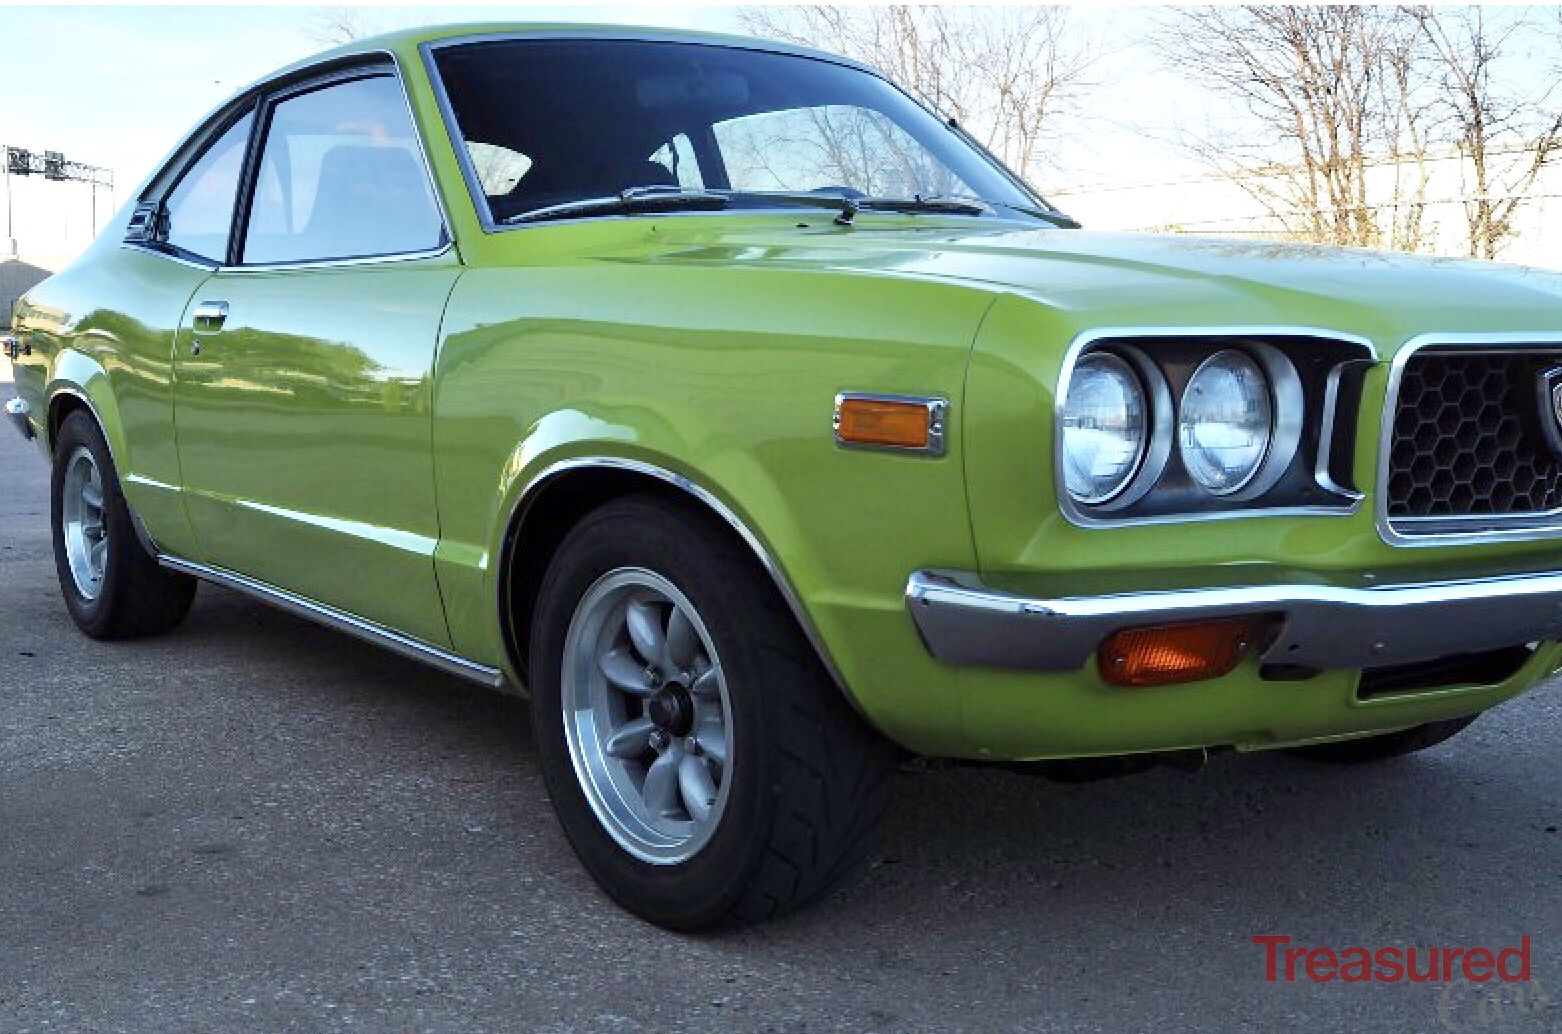 1975 Mazda RX 3 Classic Cars for sale - Treasured Cars